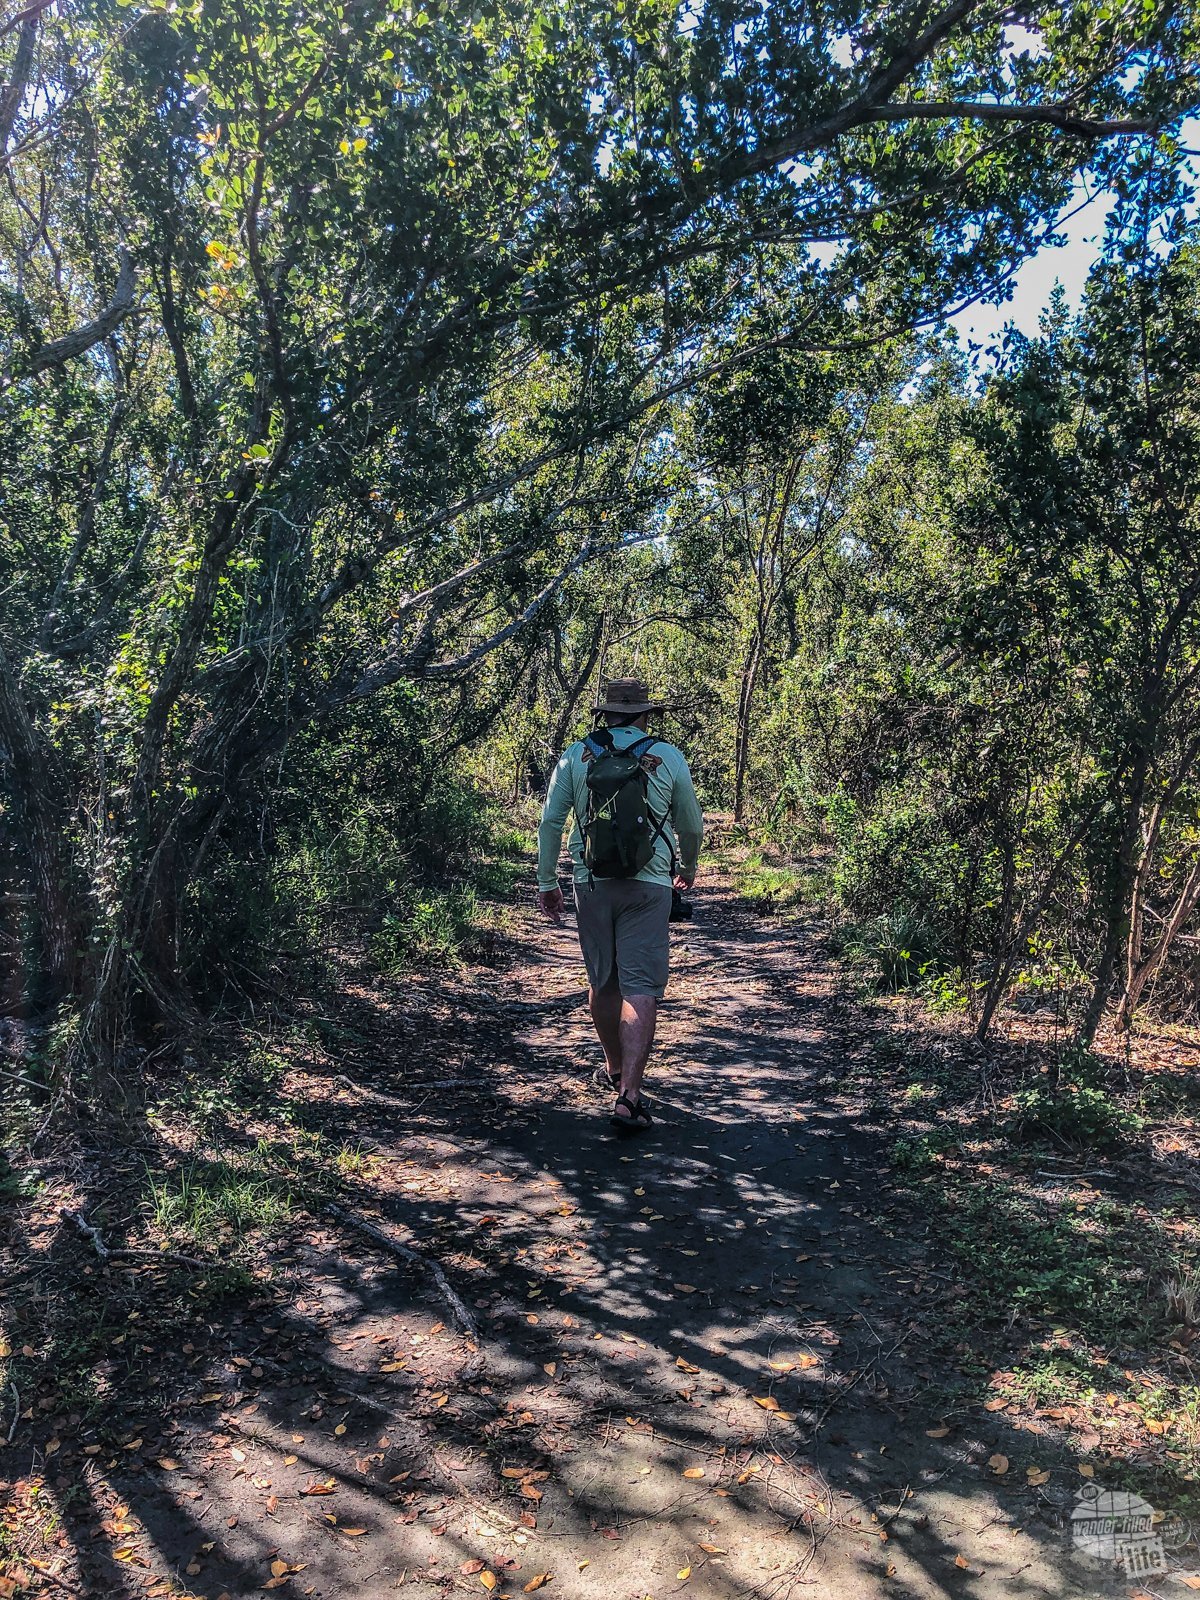 Grant walking the nature trail on Boca Chita Key.